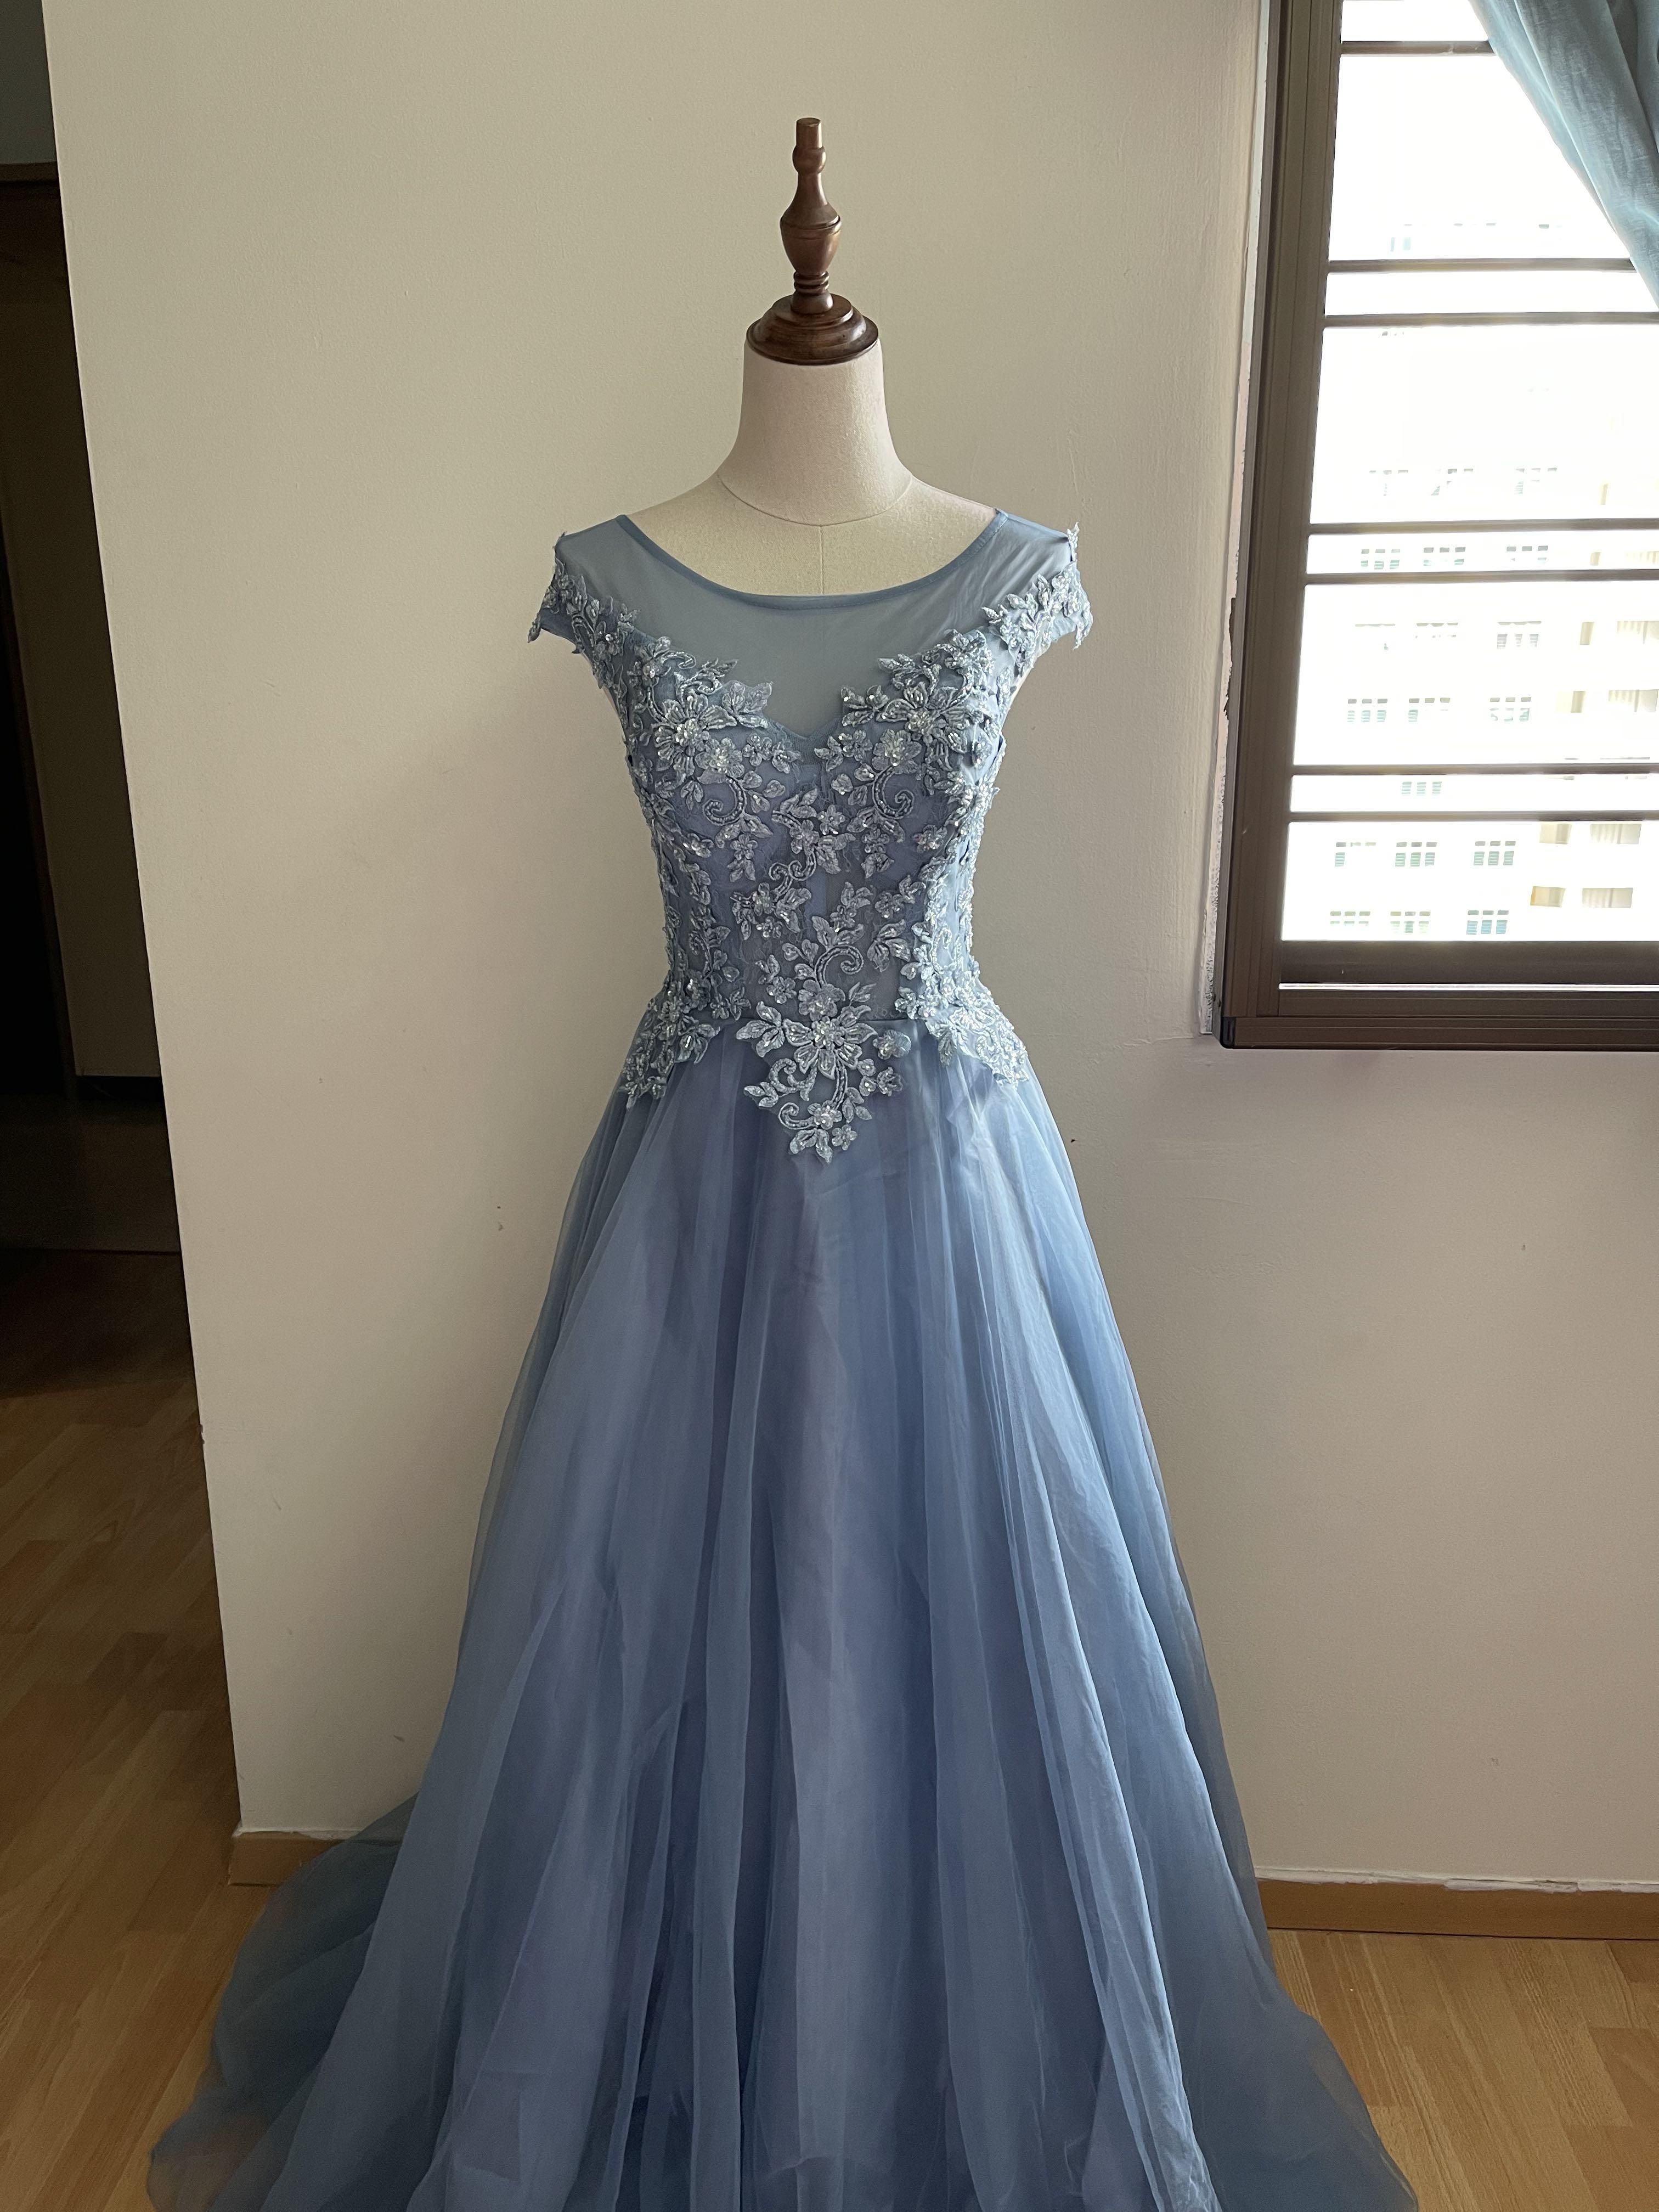 Dusty Blue Evening Gown Rental / Sale ...